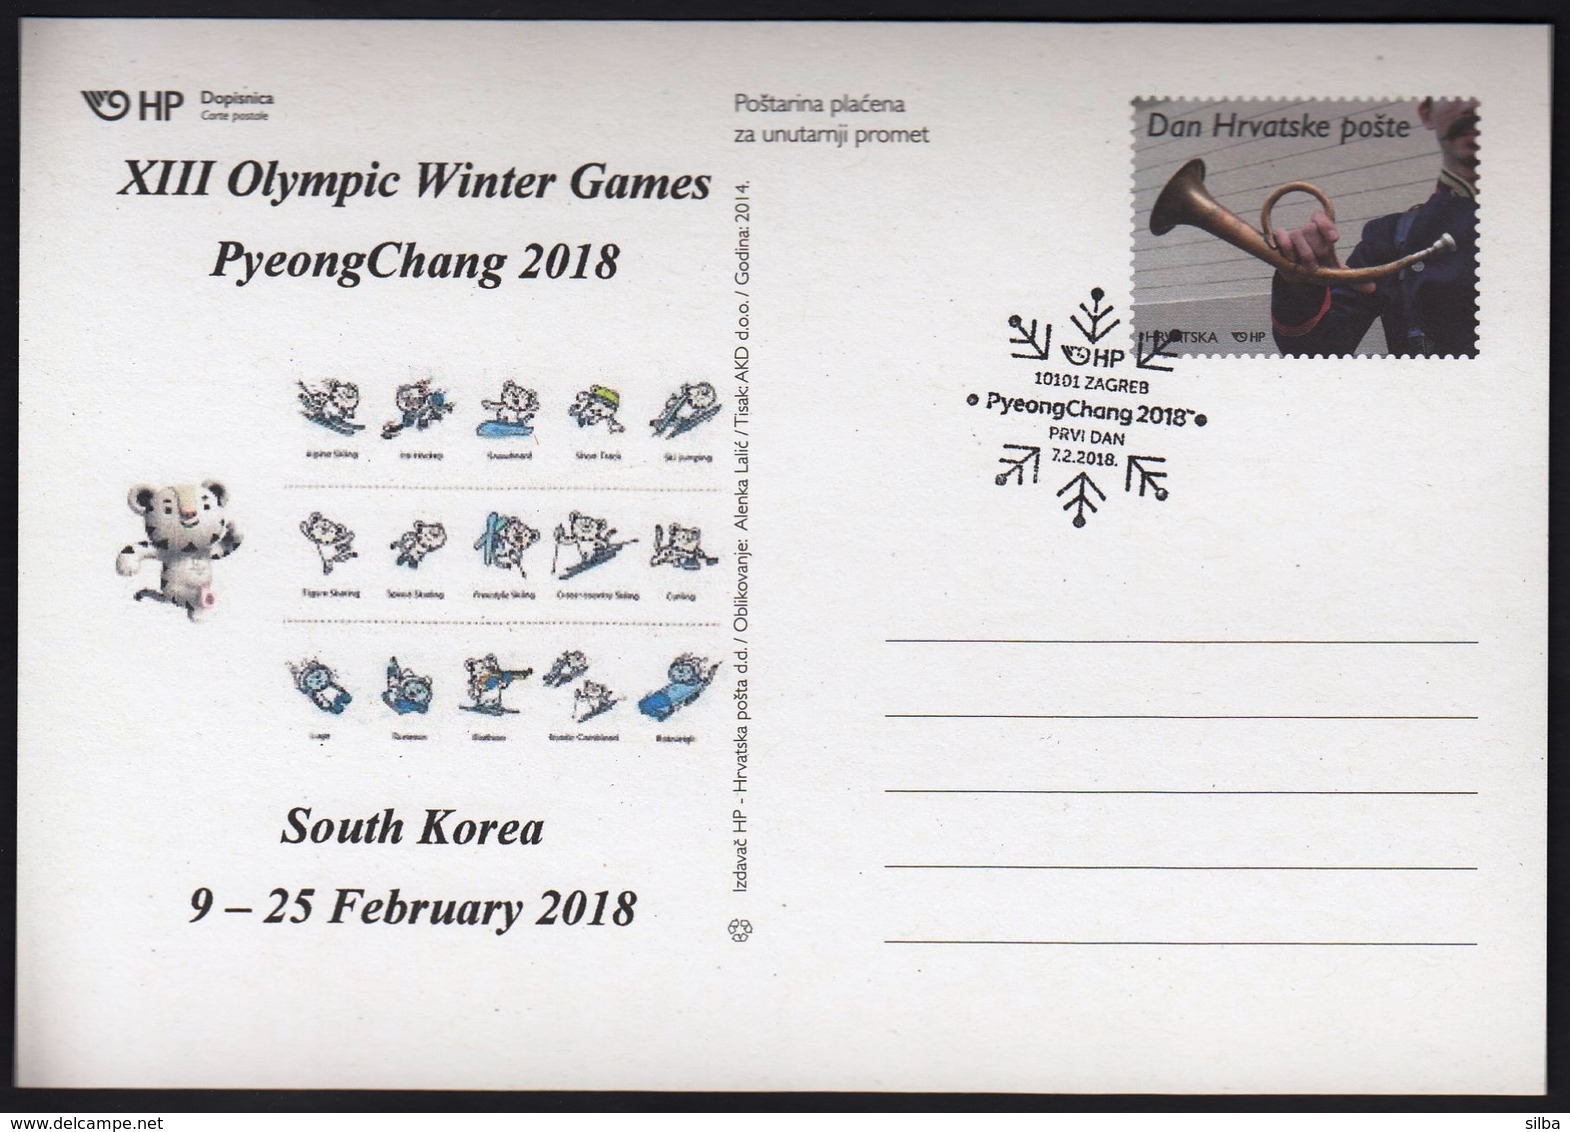 Croatia Zagreb 2018 / XIII Olympic Winter Games PyeongChang, South Korea - Inverno 2018 : Pyeongchang